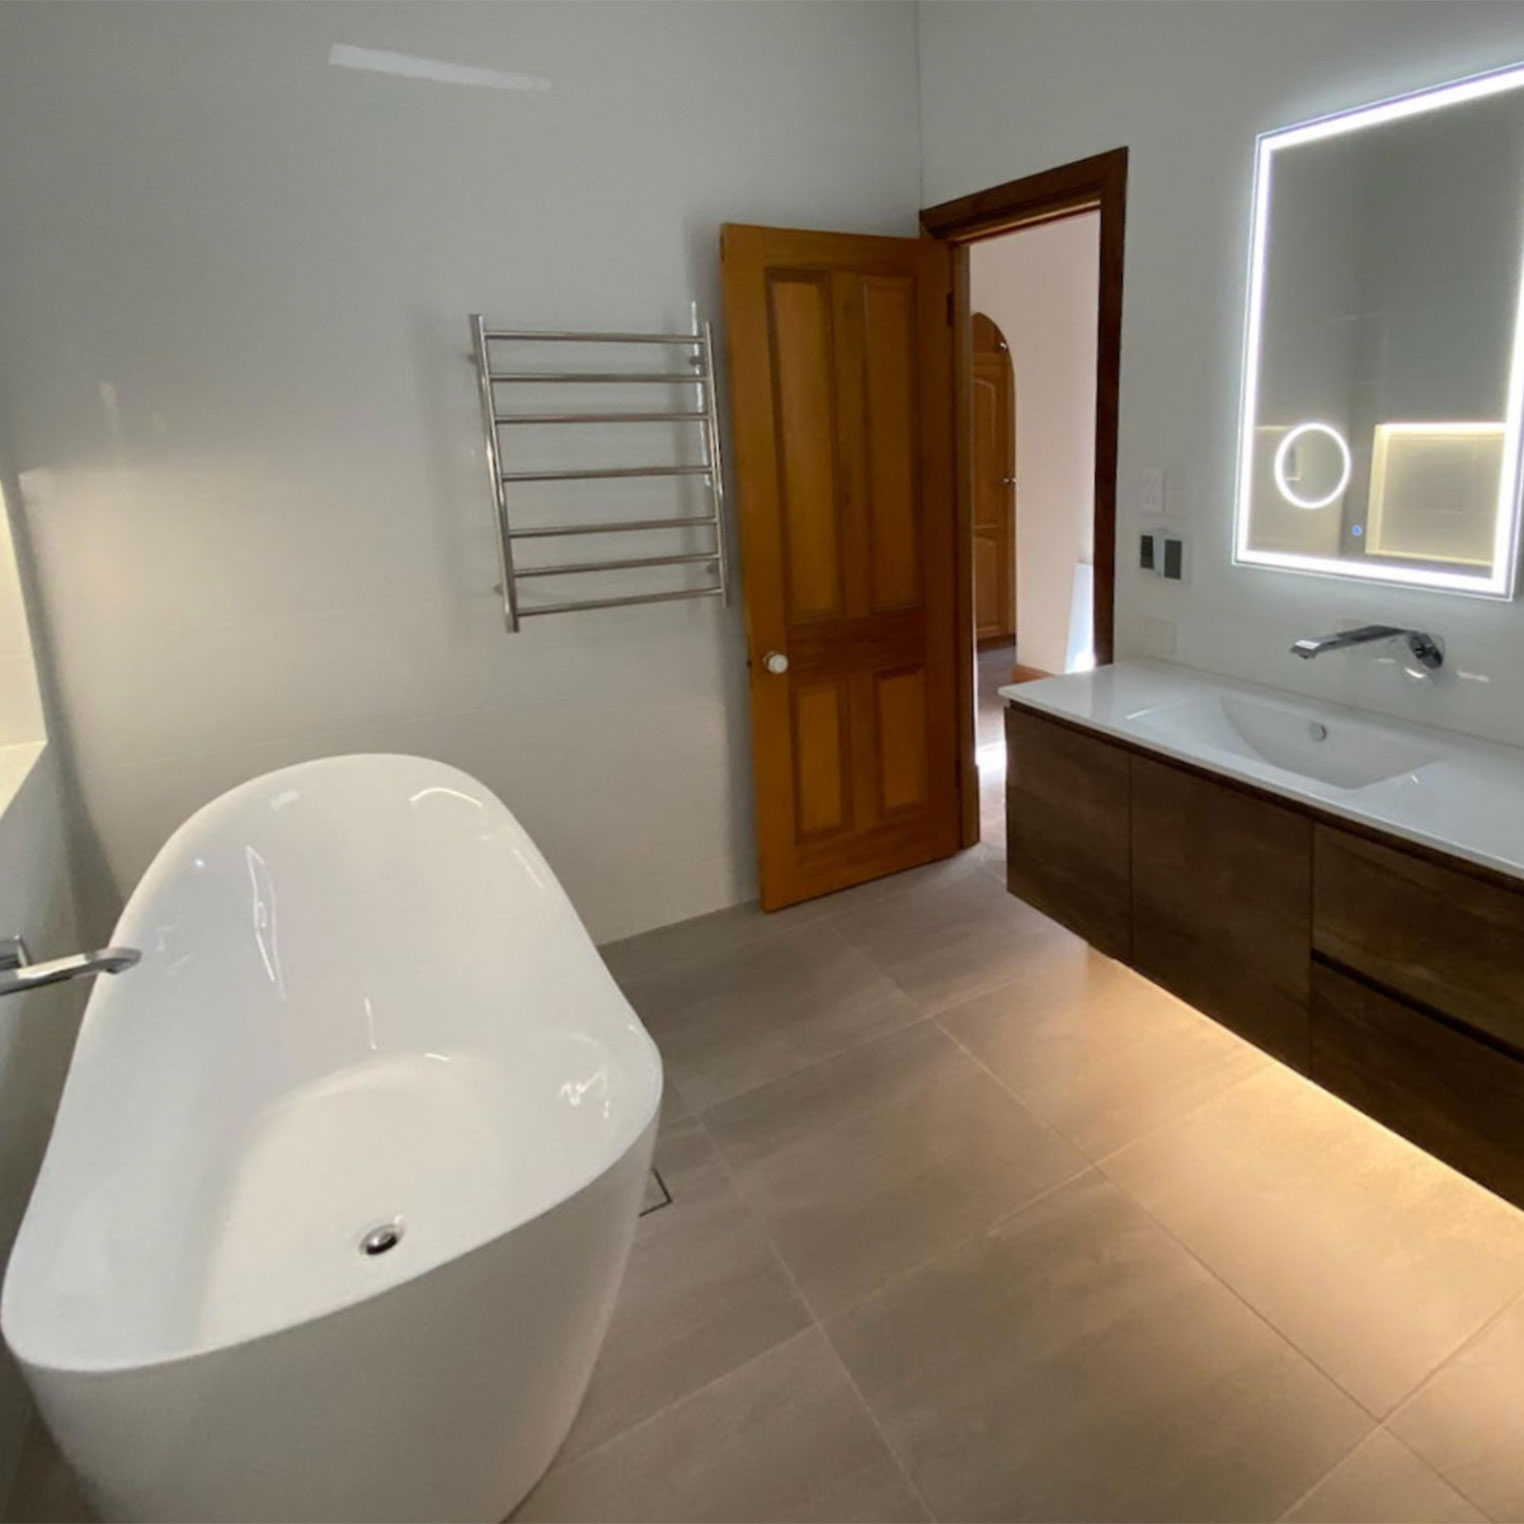 Adelaide Hills Bathroom Renovations